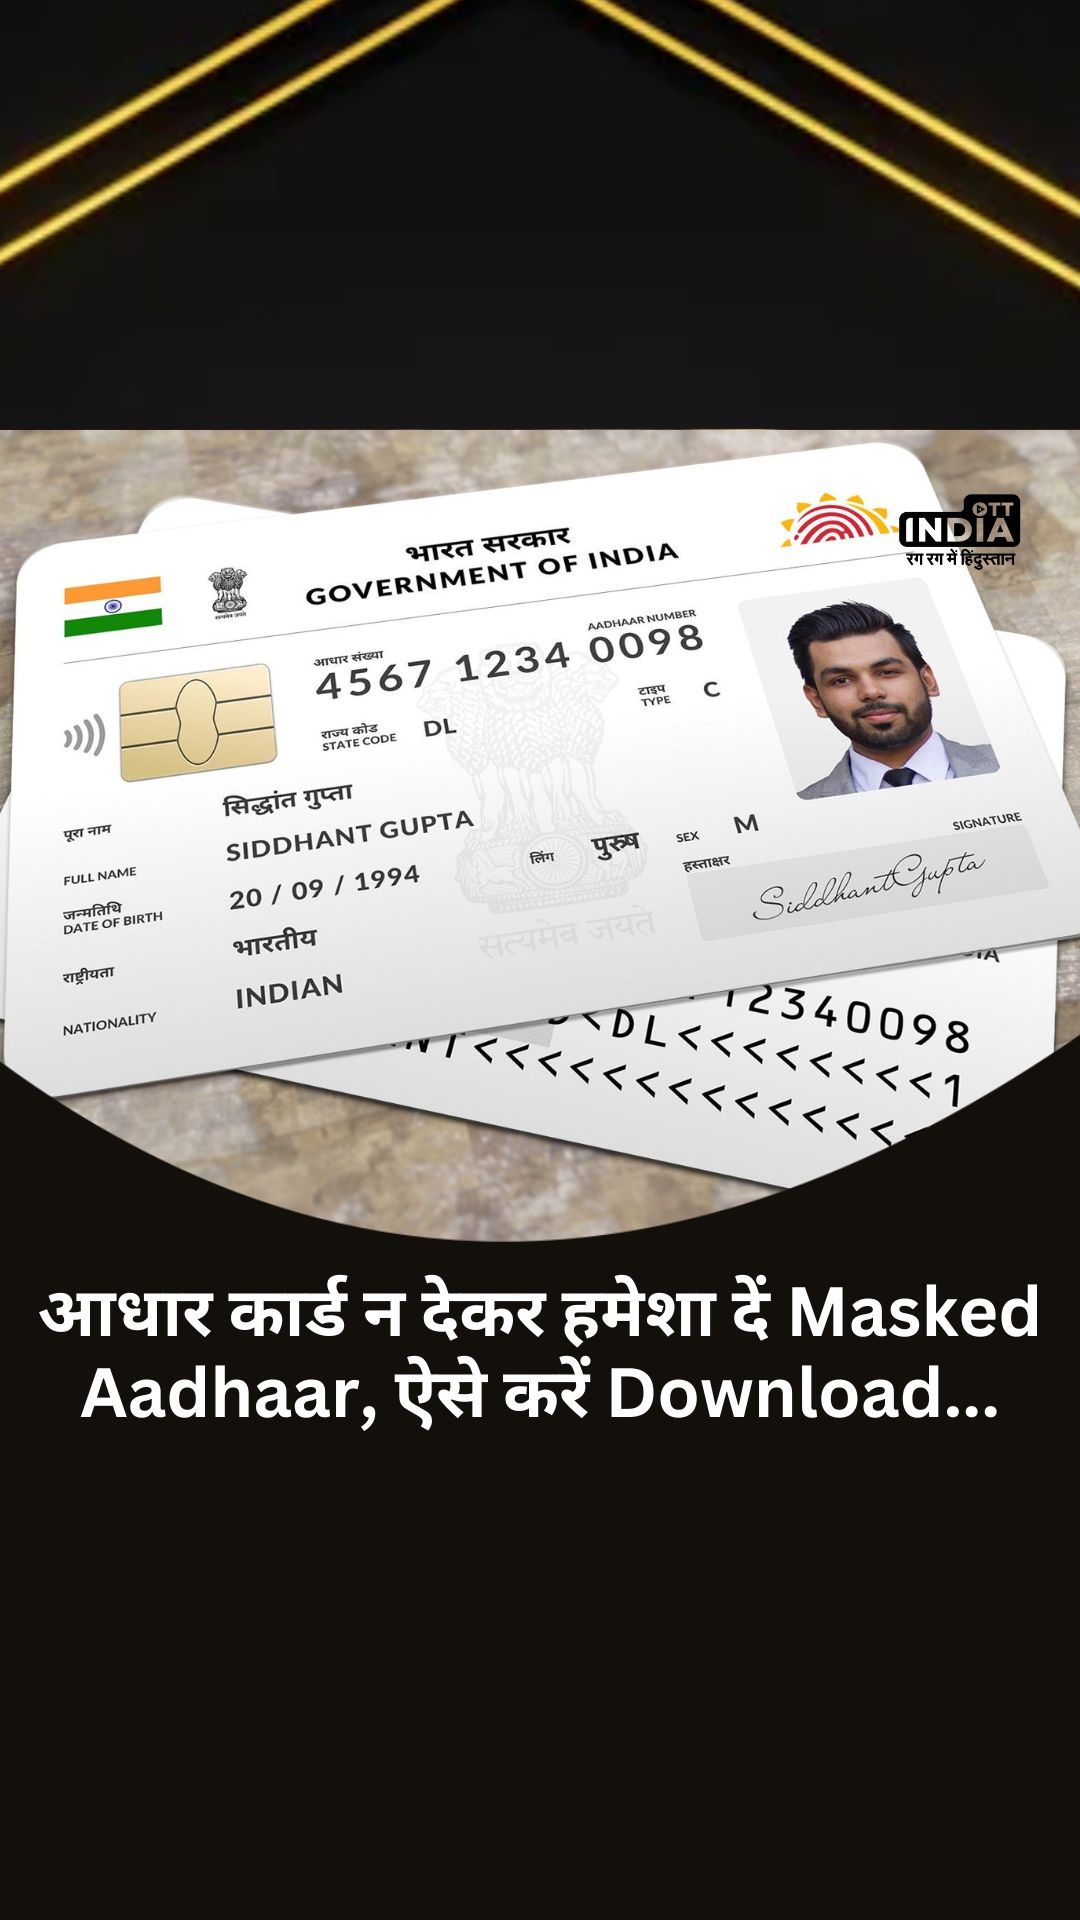 Instead of giving Aadhaar Card, always give Masked Aadhaar Card, download it like this...